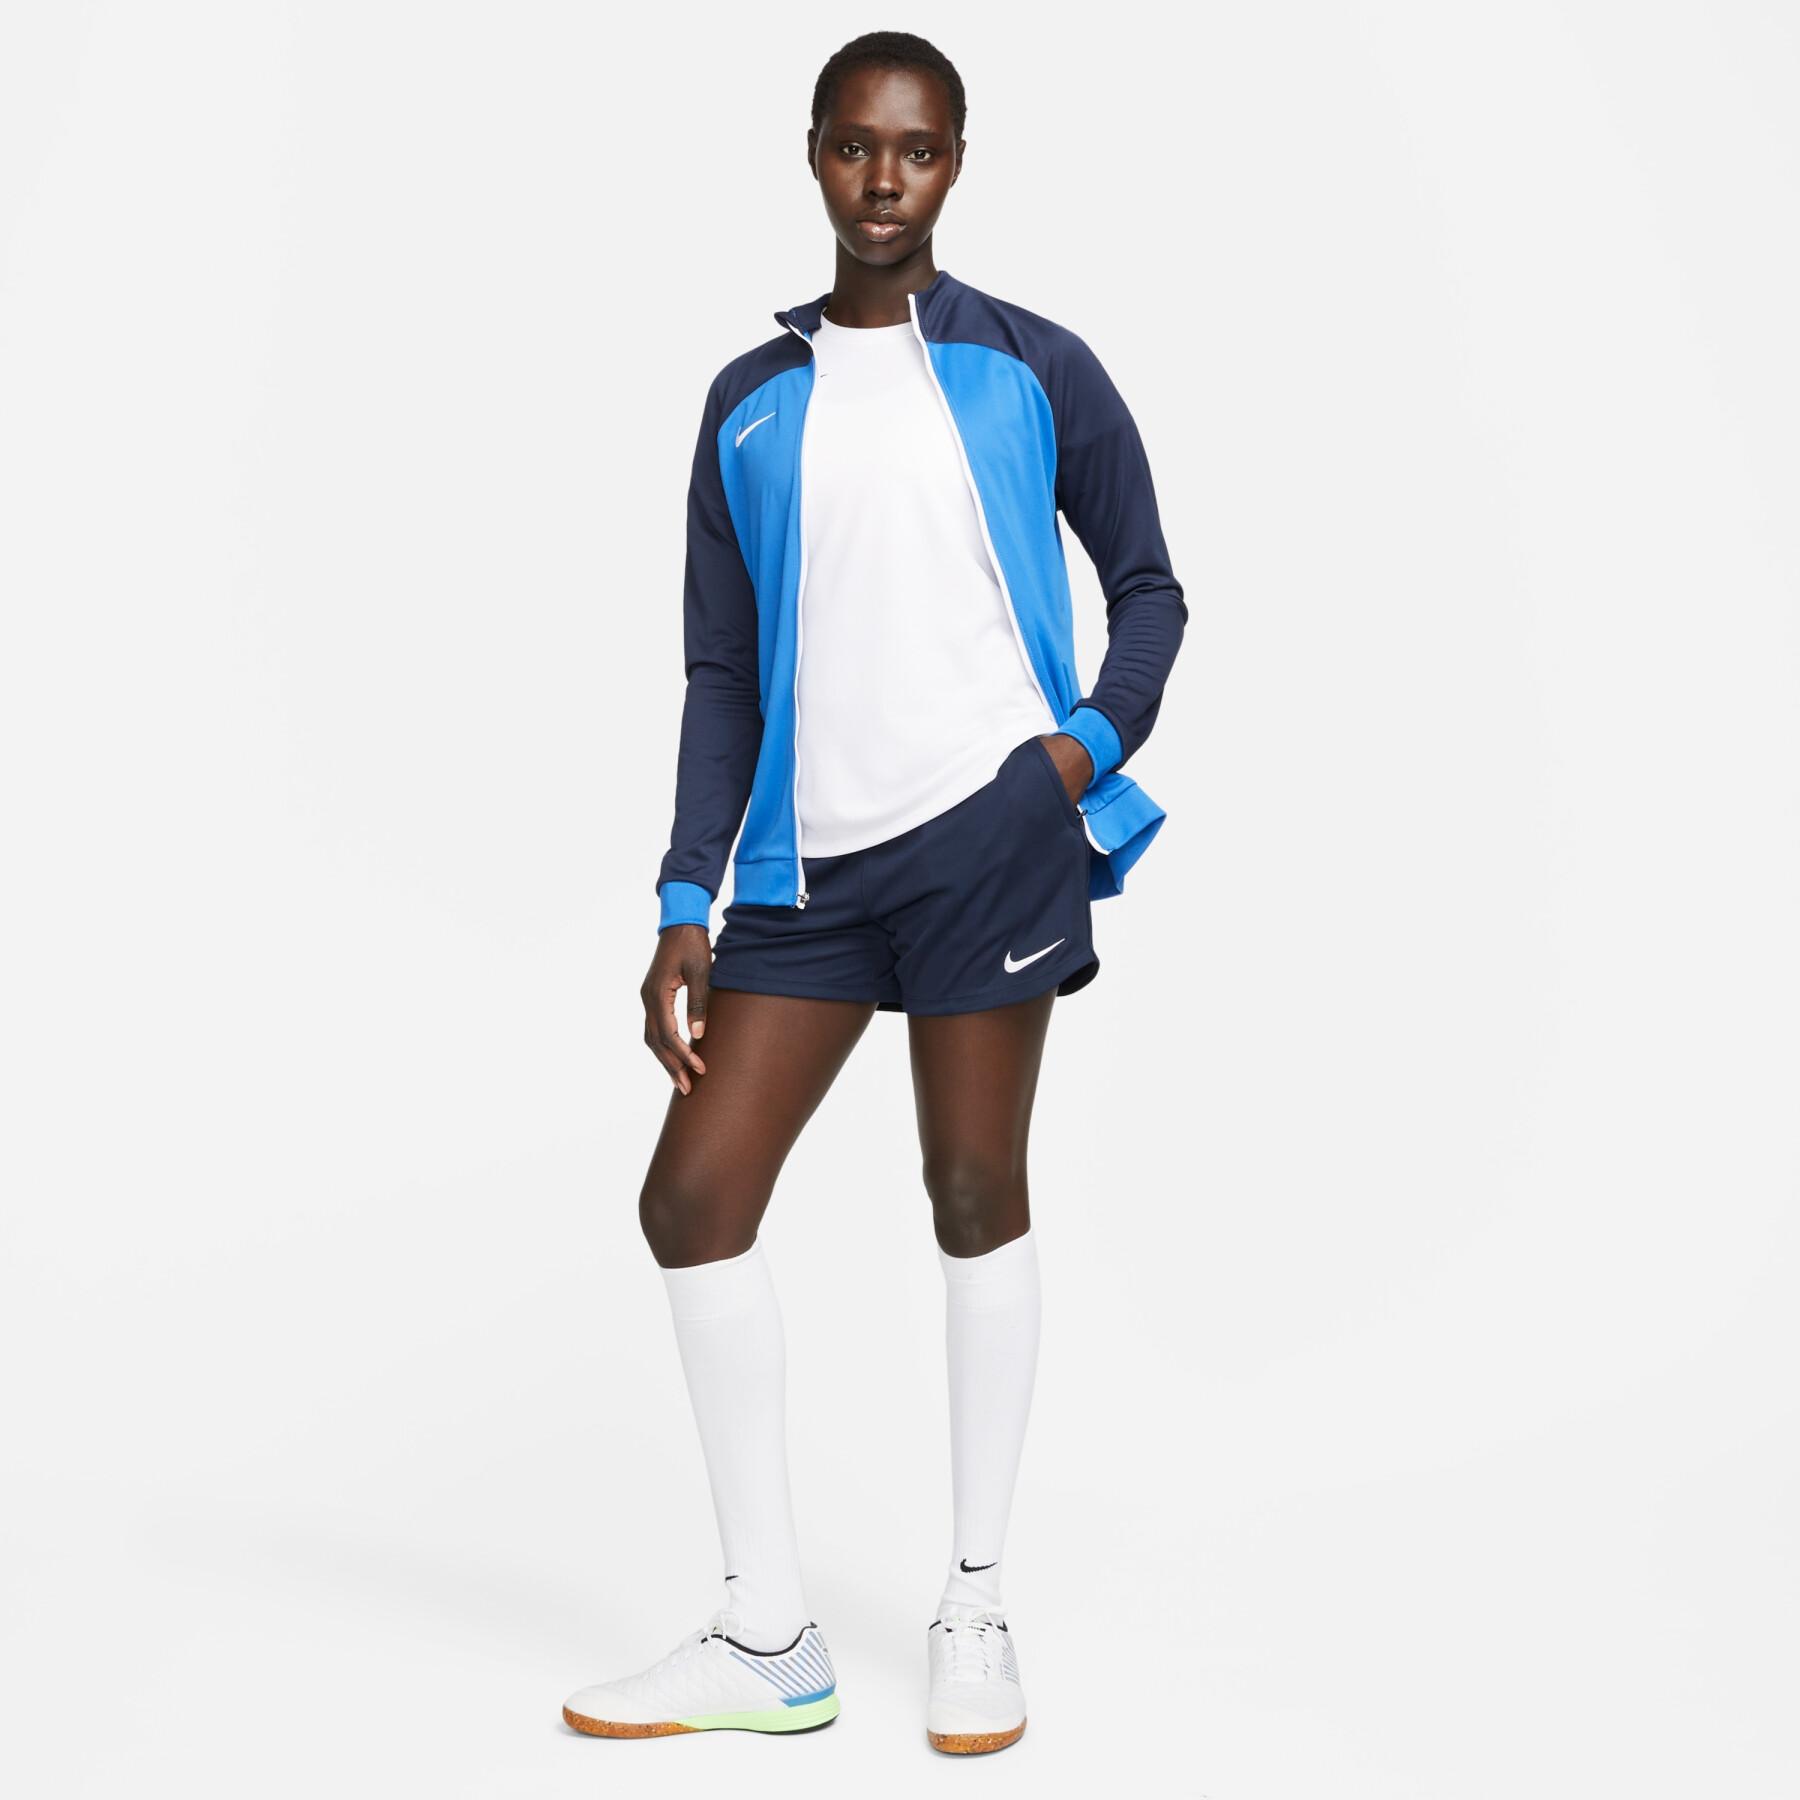 Women's shorts Nike Dynamic Fit Park20